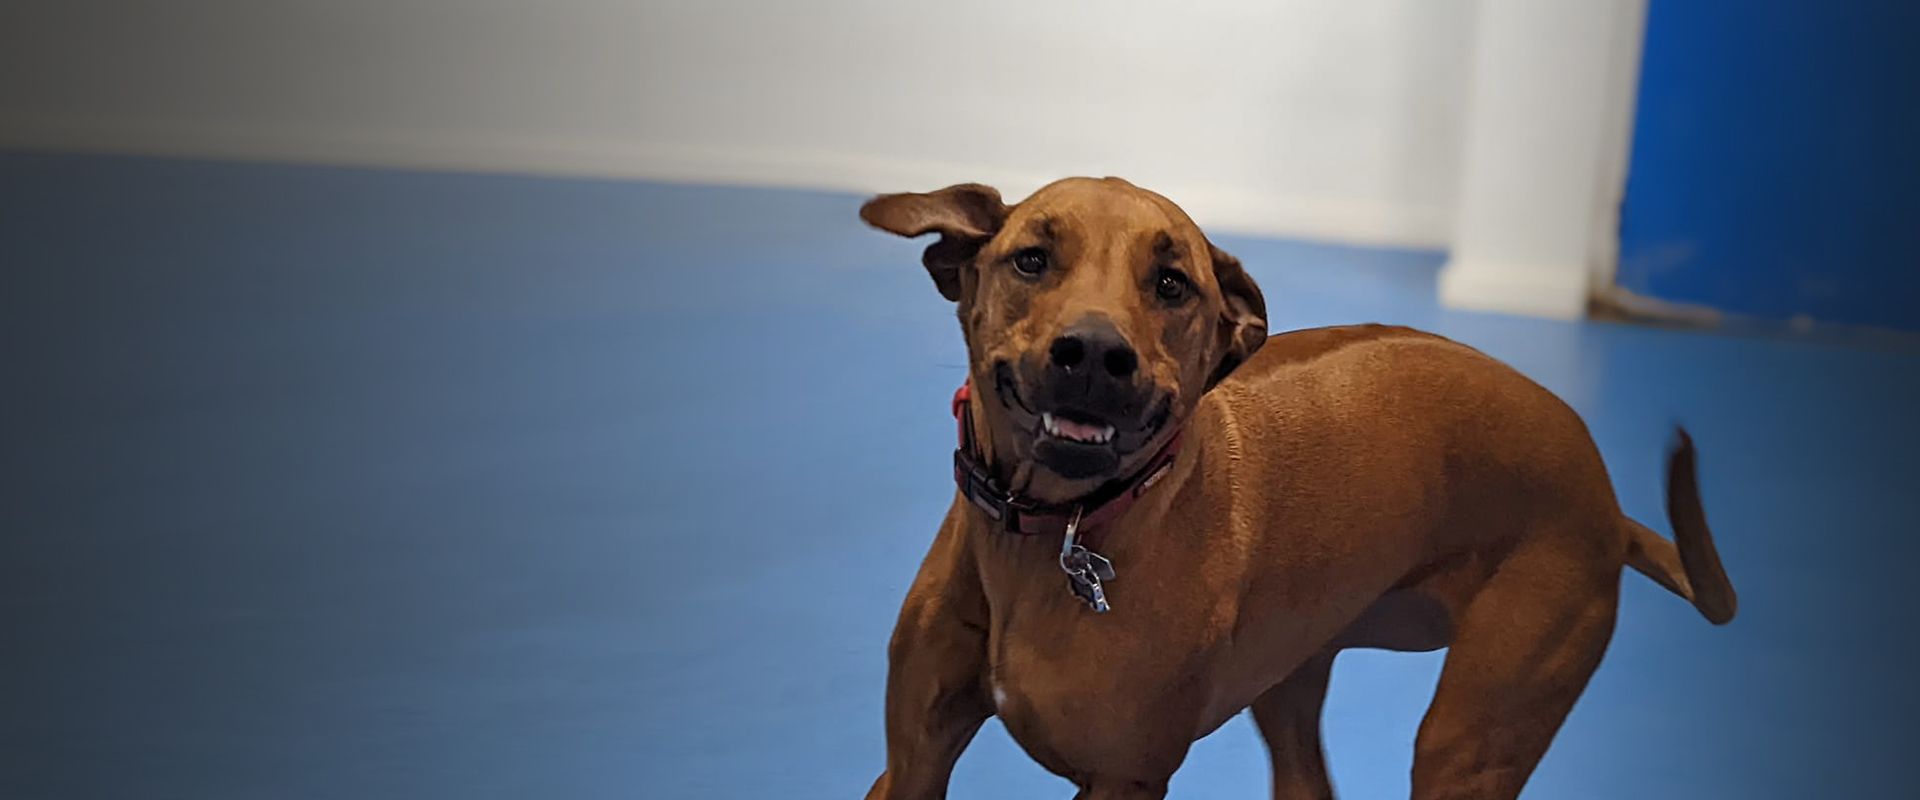 brown dog smiling on blue background